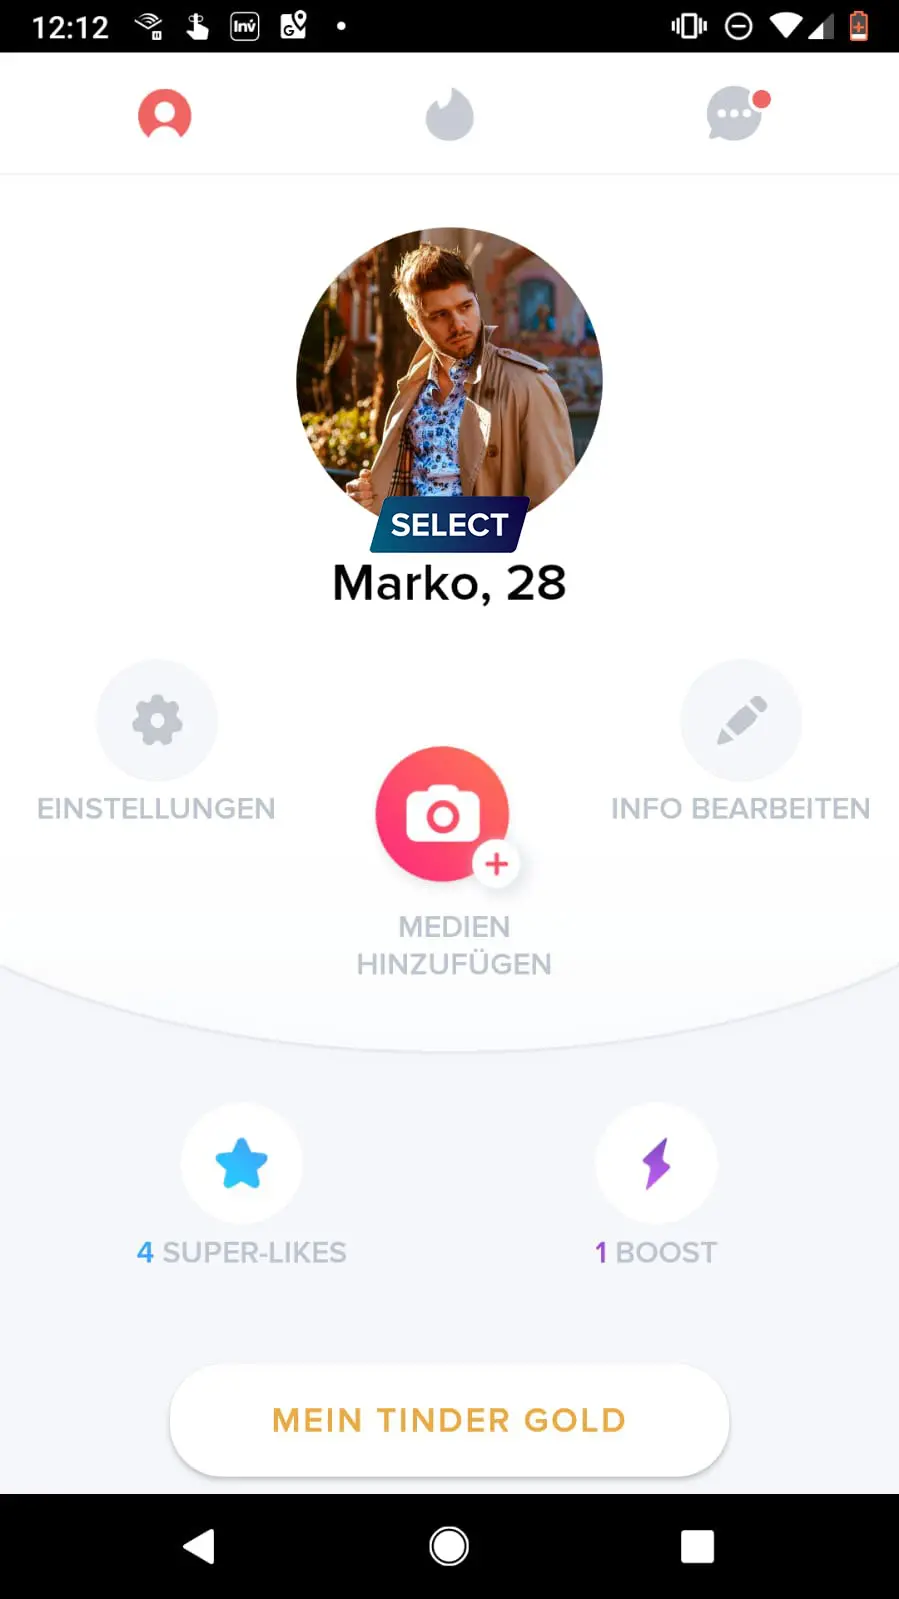 Flirtcoach-Marko-Polo-Tinder-Profi-und-Experte